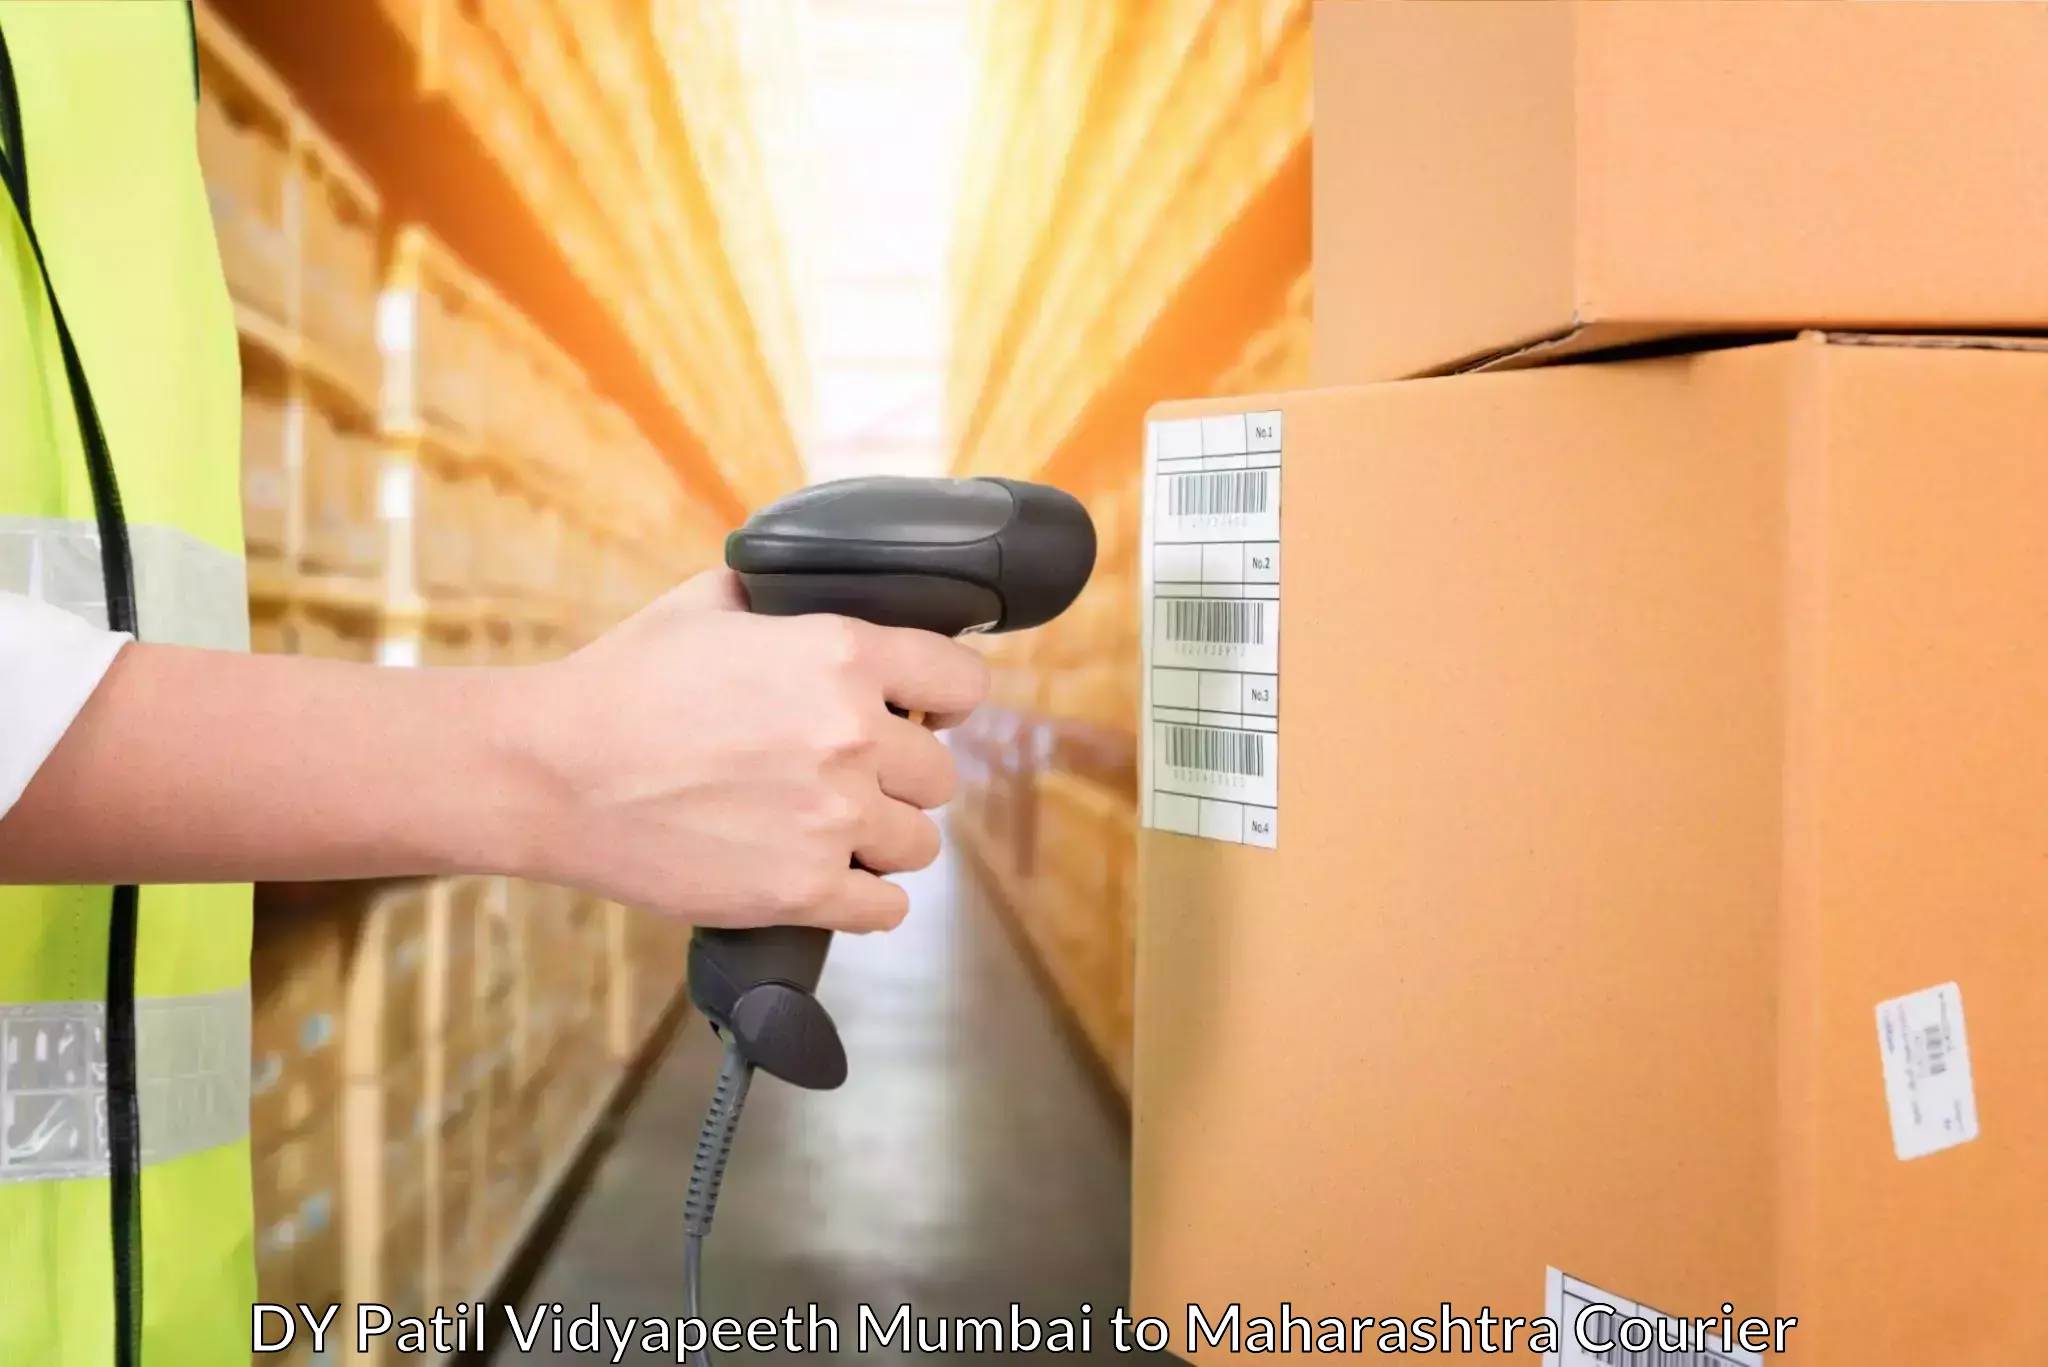 Quick dispatch service DY Patil Vidyapeeth Mumbai to Supe